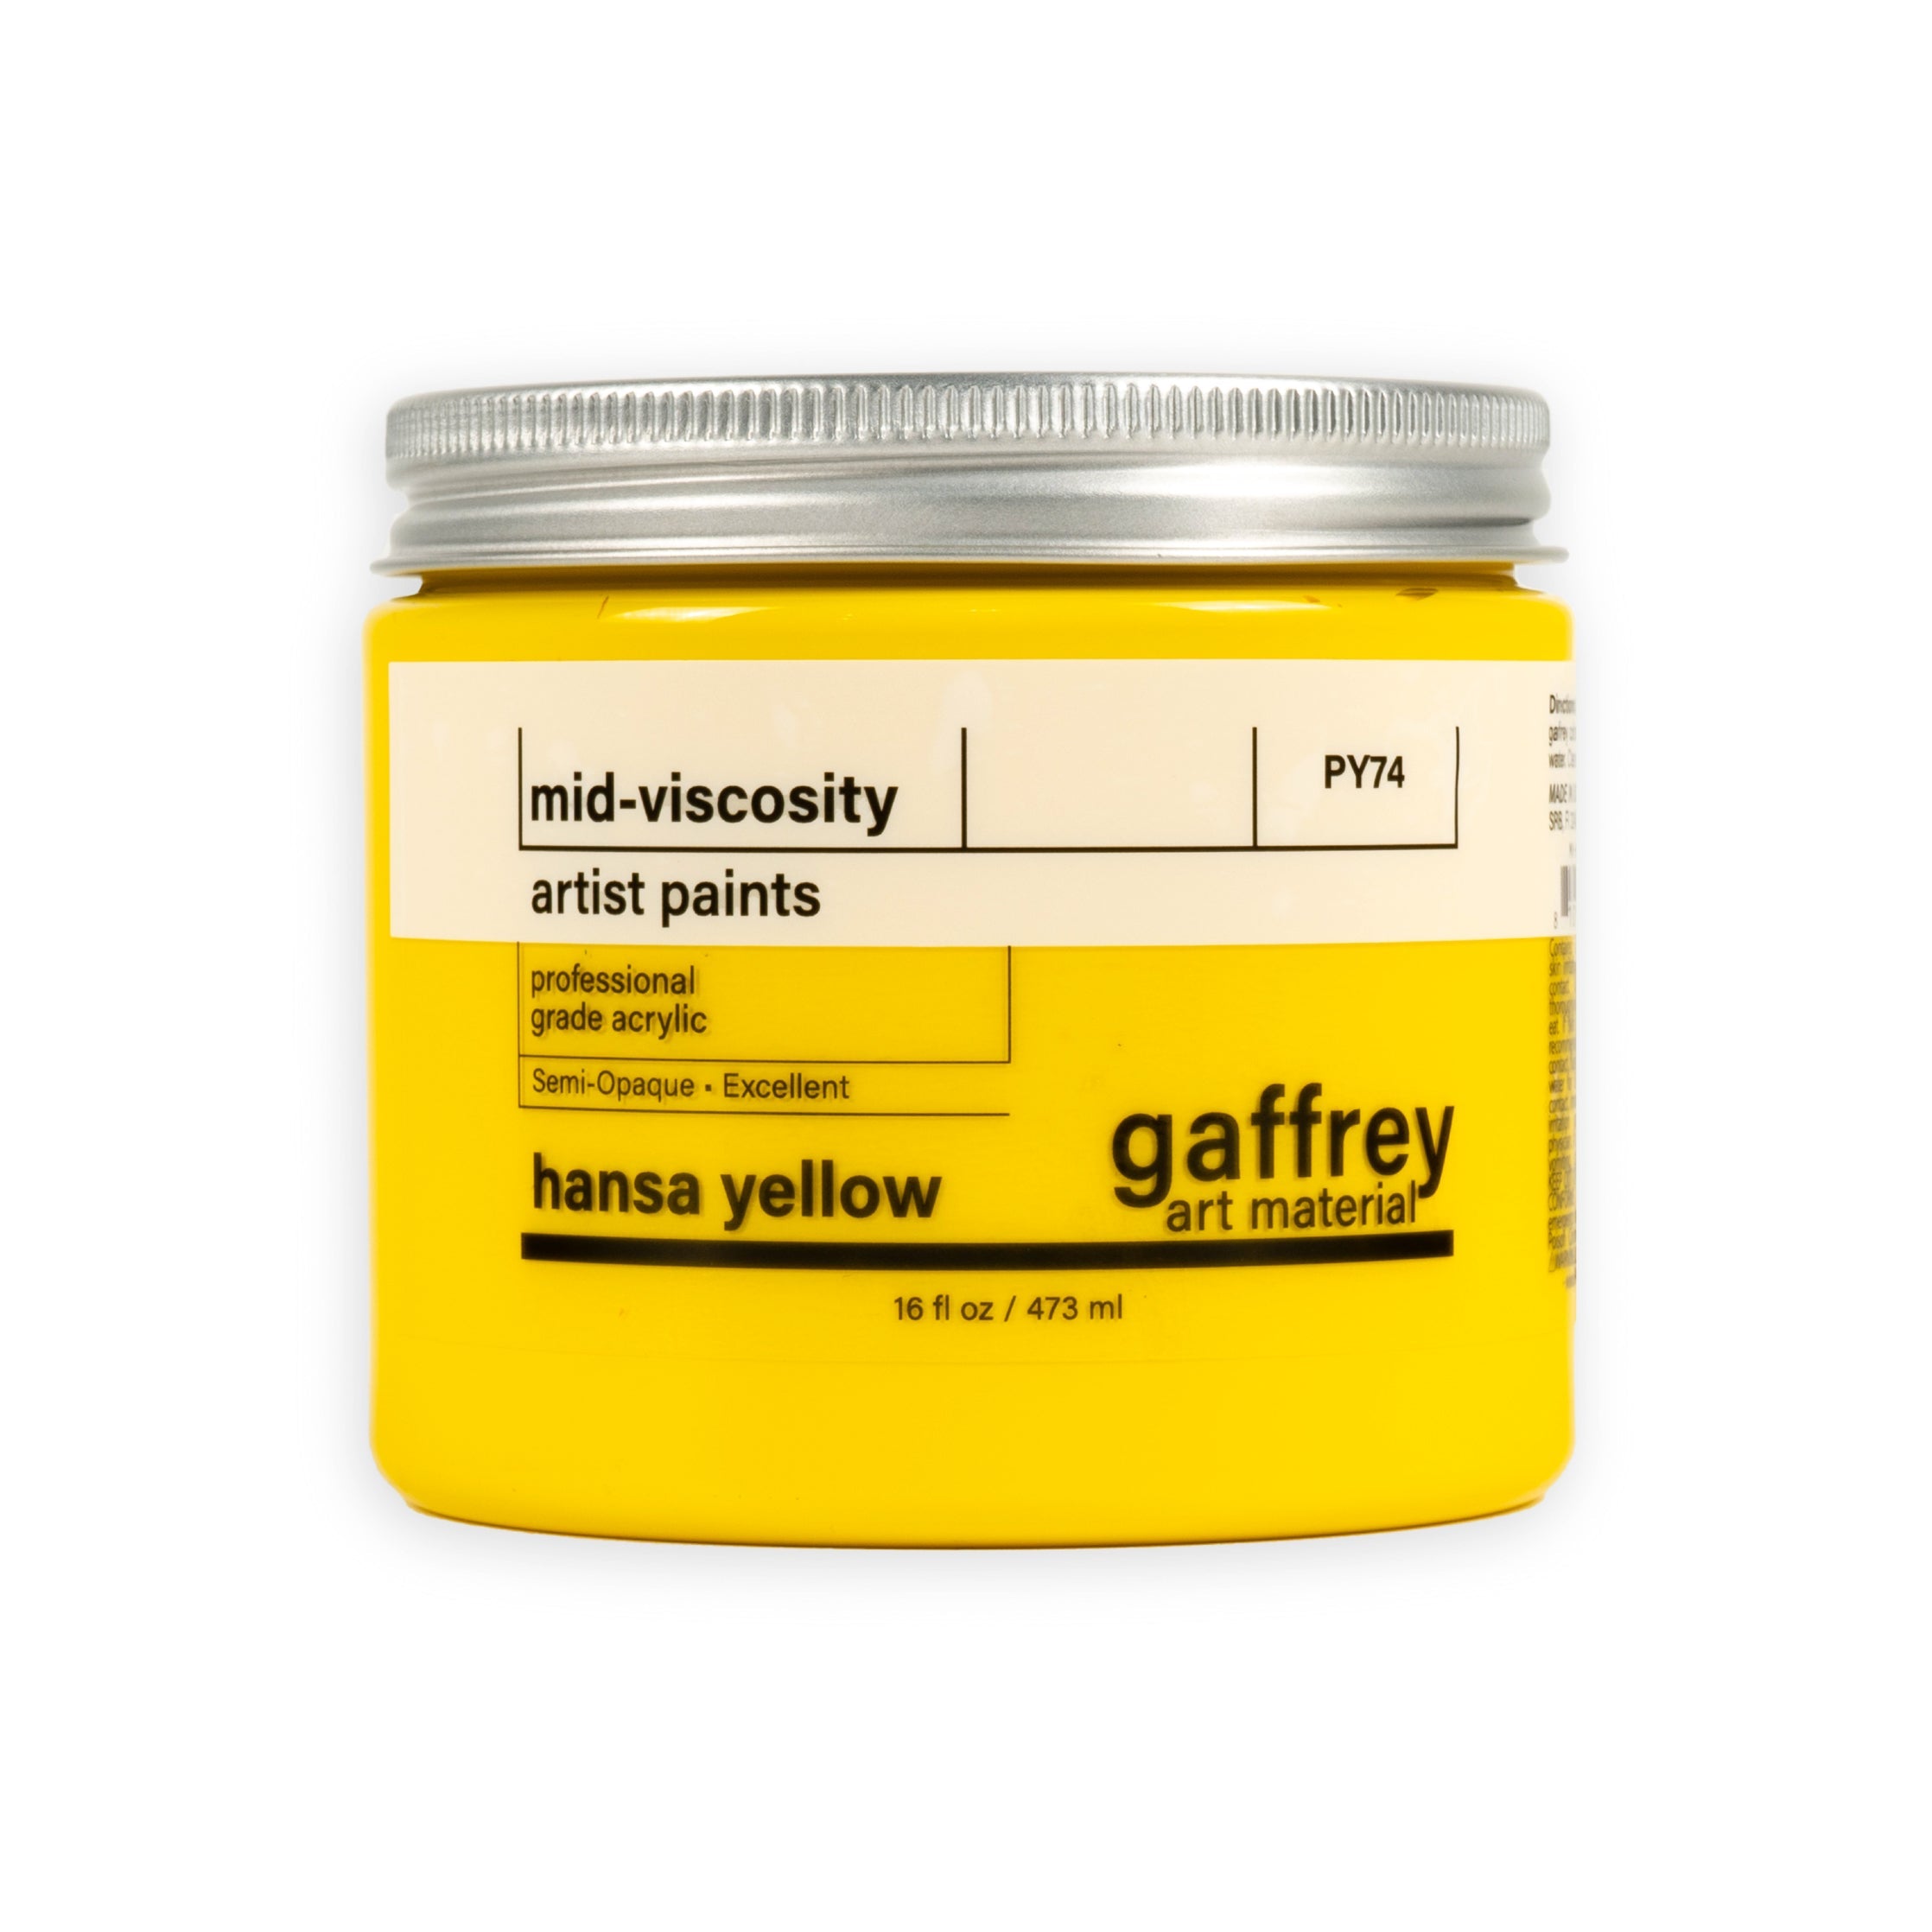 Hansa Yellow Artist Acrylic Paint - Gaffrey Art Material